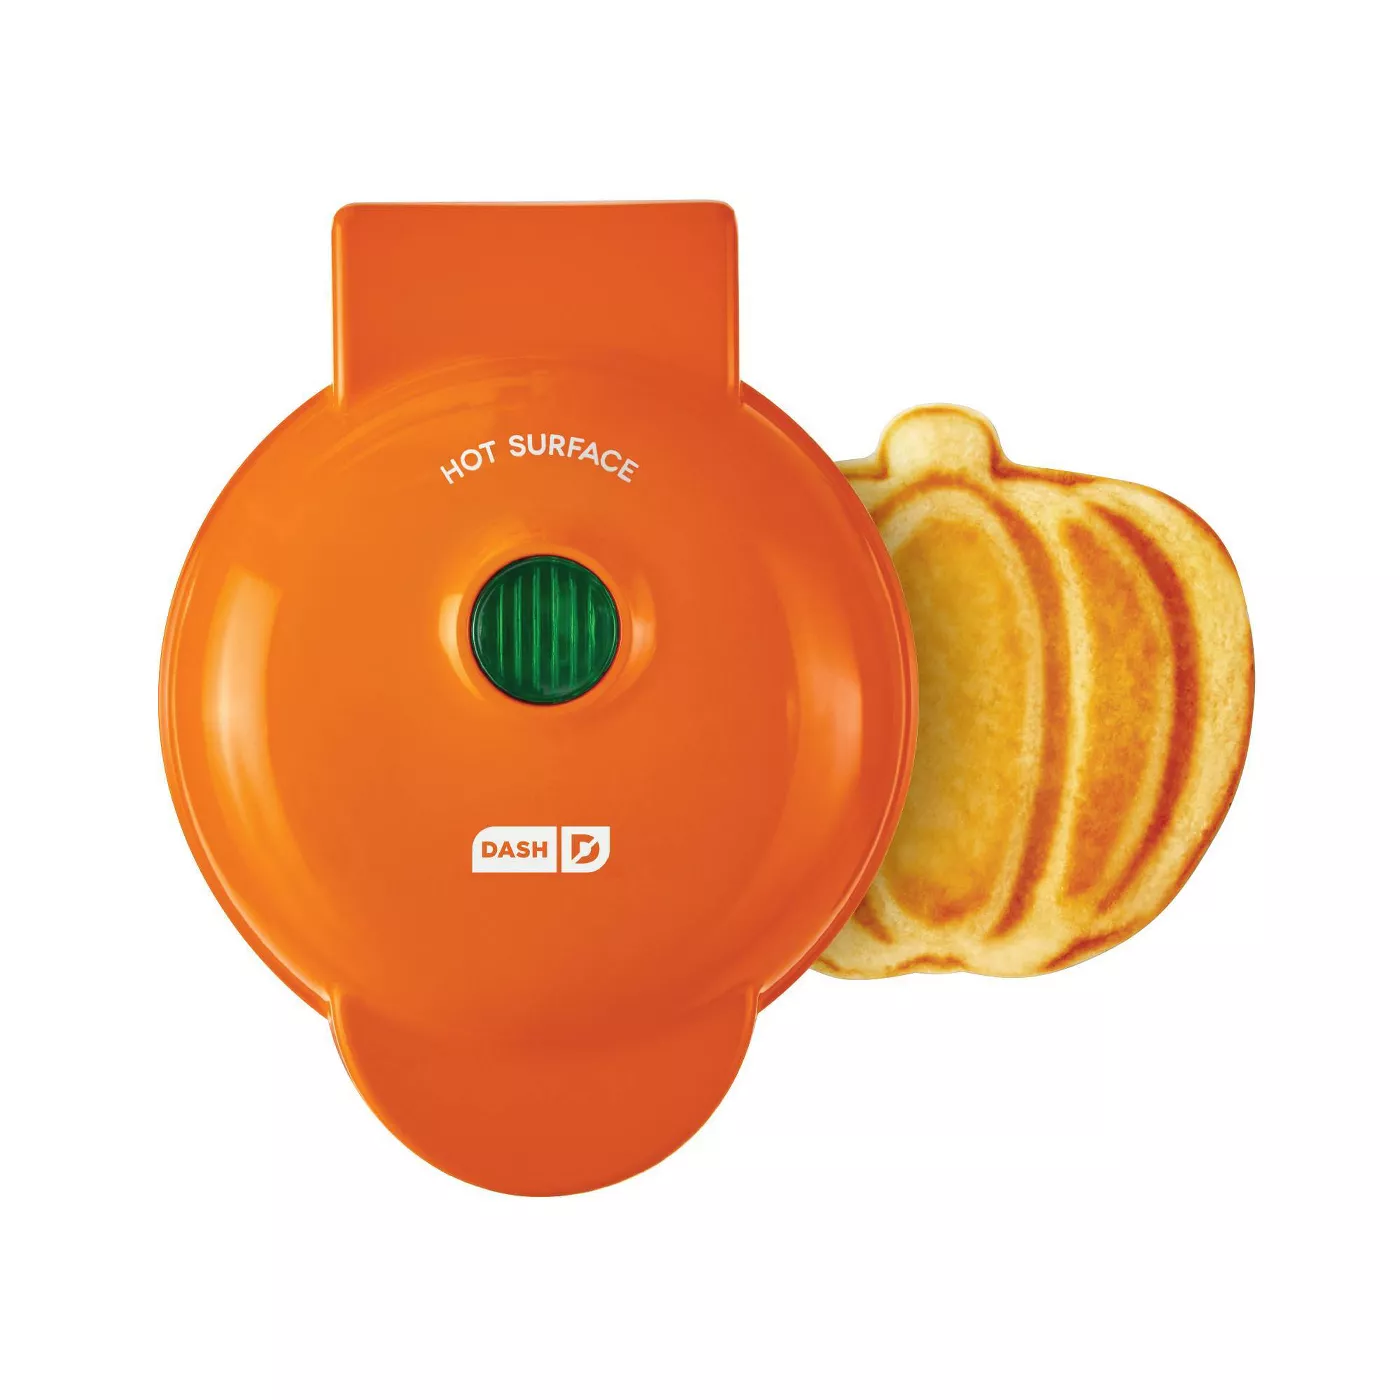 Dash 13" Pumpkin Shape Waffle Maker Orange - image 1 of 4